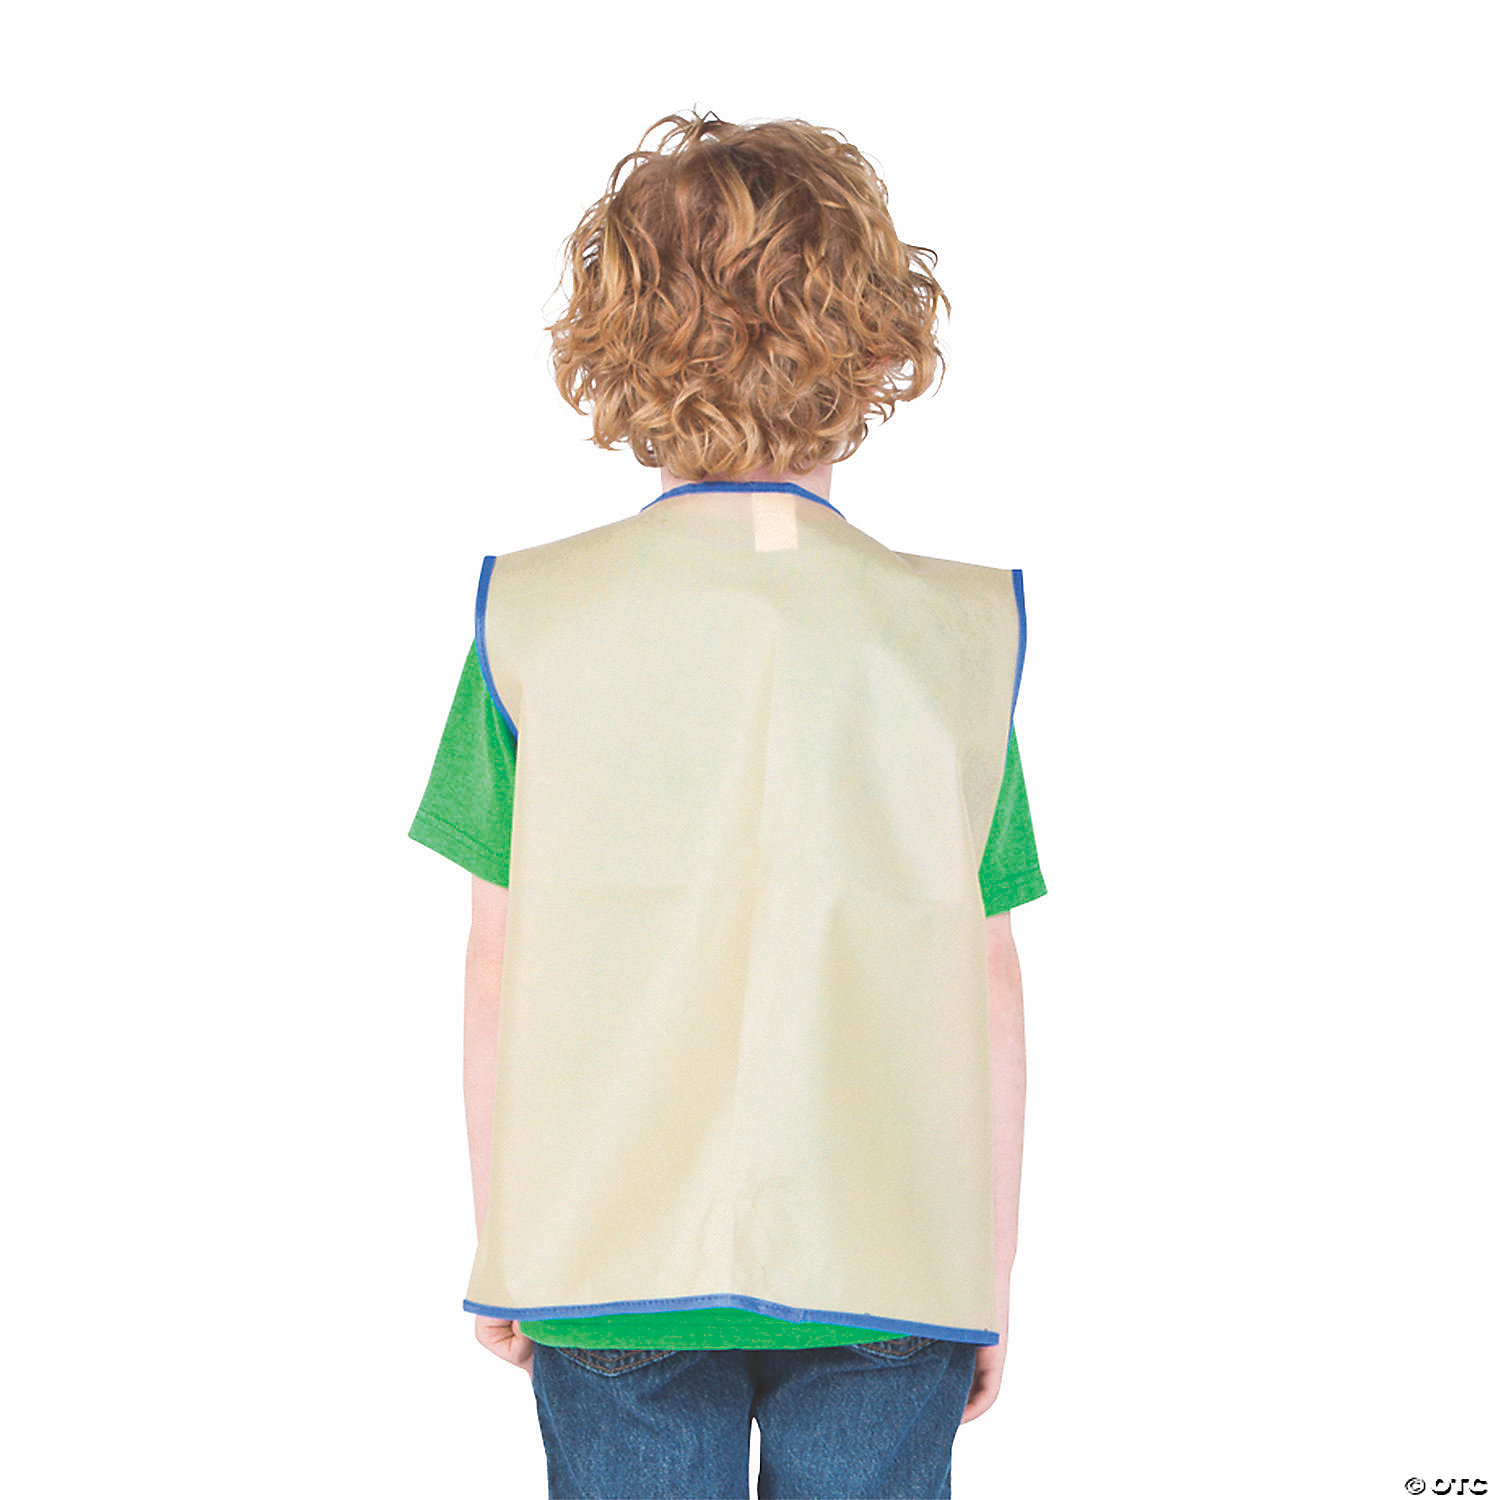 Mil Com Kids Sol95 Action Fly Fishing Vest - Junior Childrens Clothing